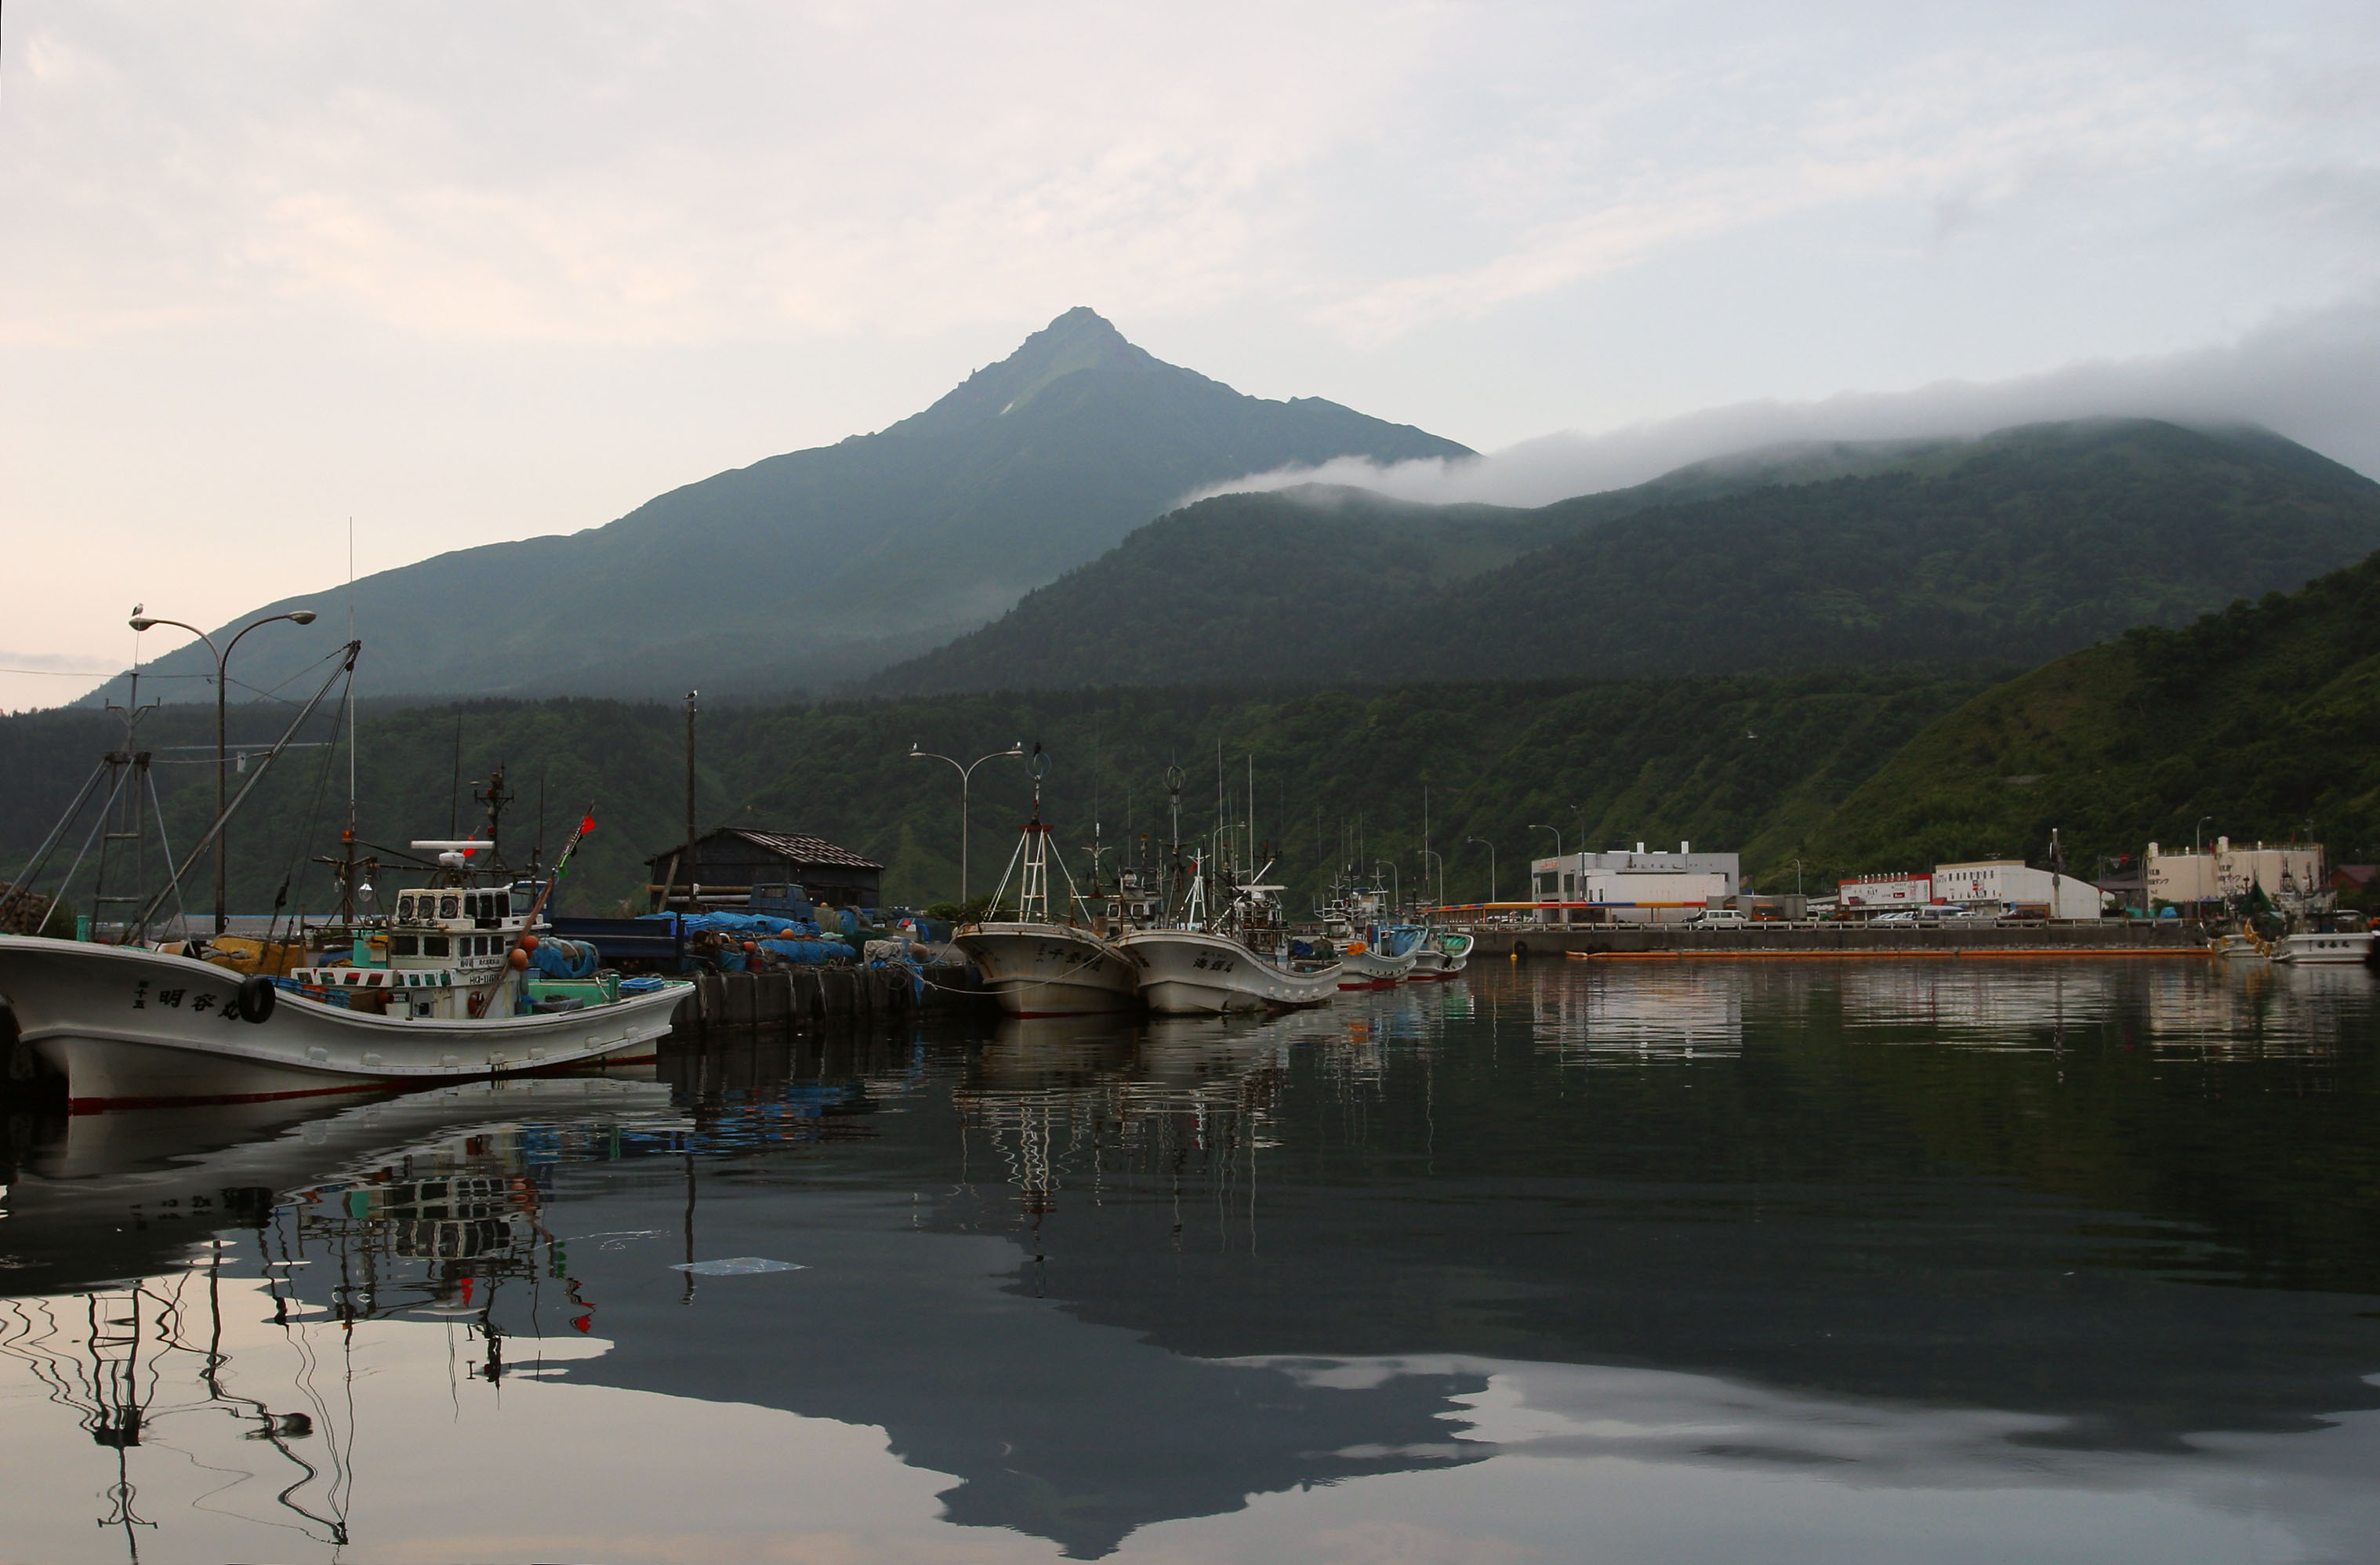 photo,material,free,landscape,picture,stock photo,Creative Commons,Mt. Rishiri-fuji and its reflection, water surface, mountain, sky, Oshidomari Fishing Port